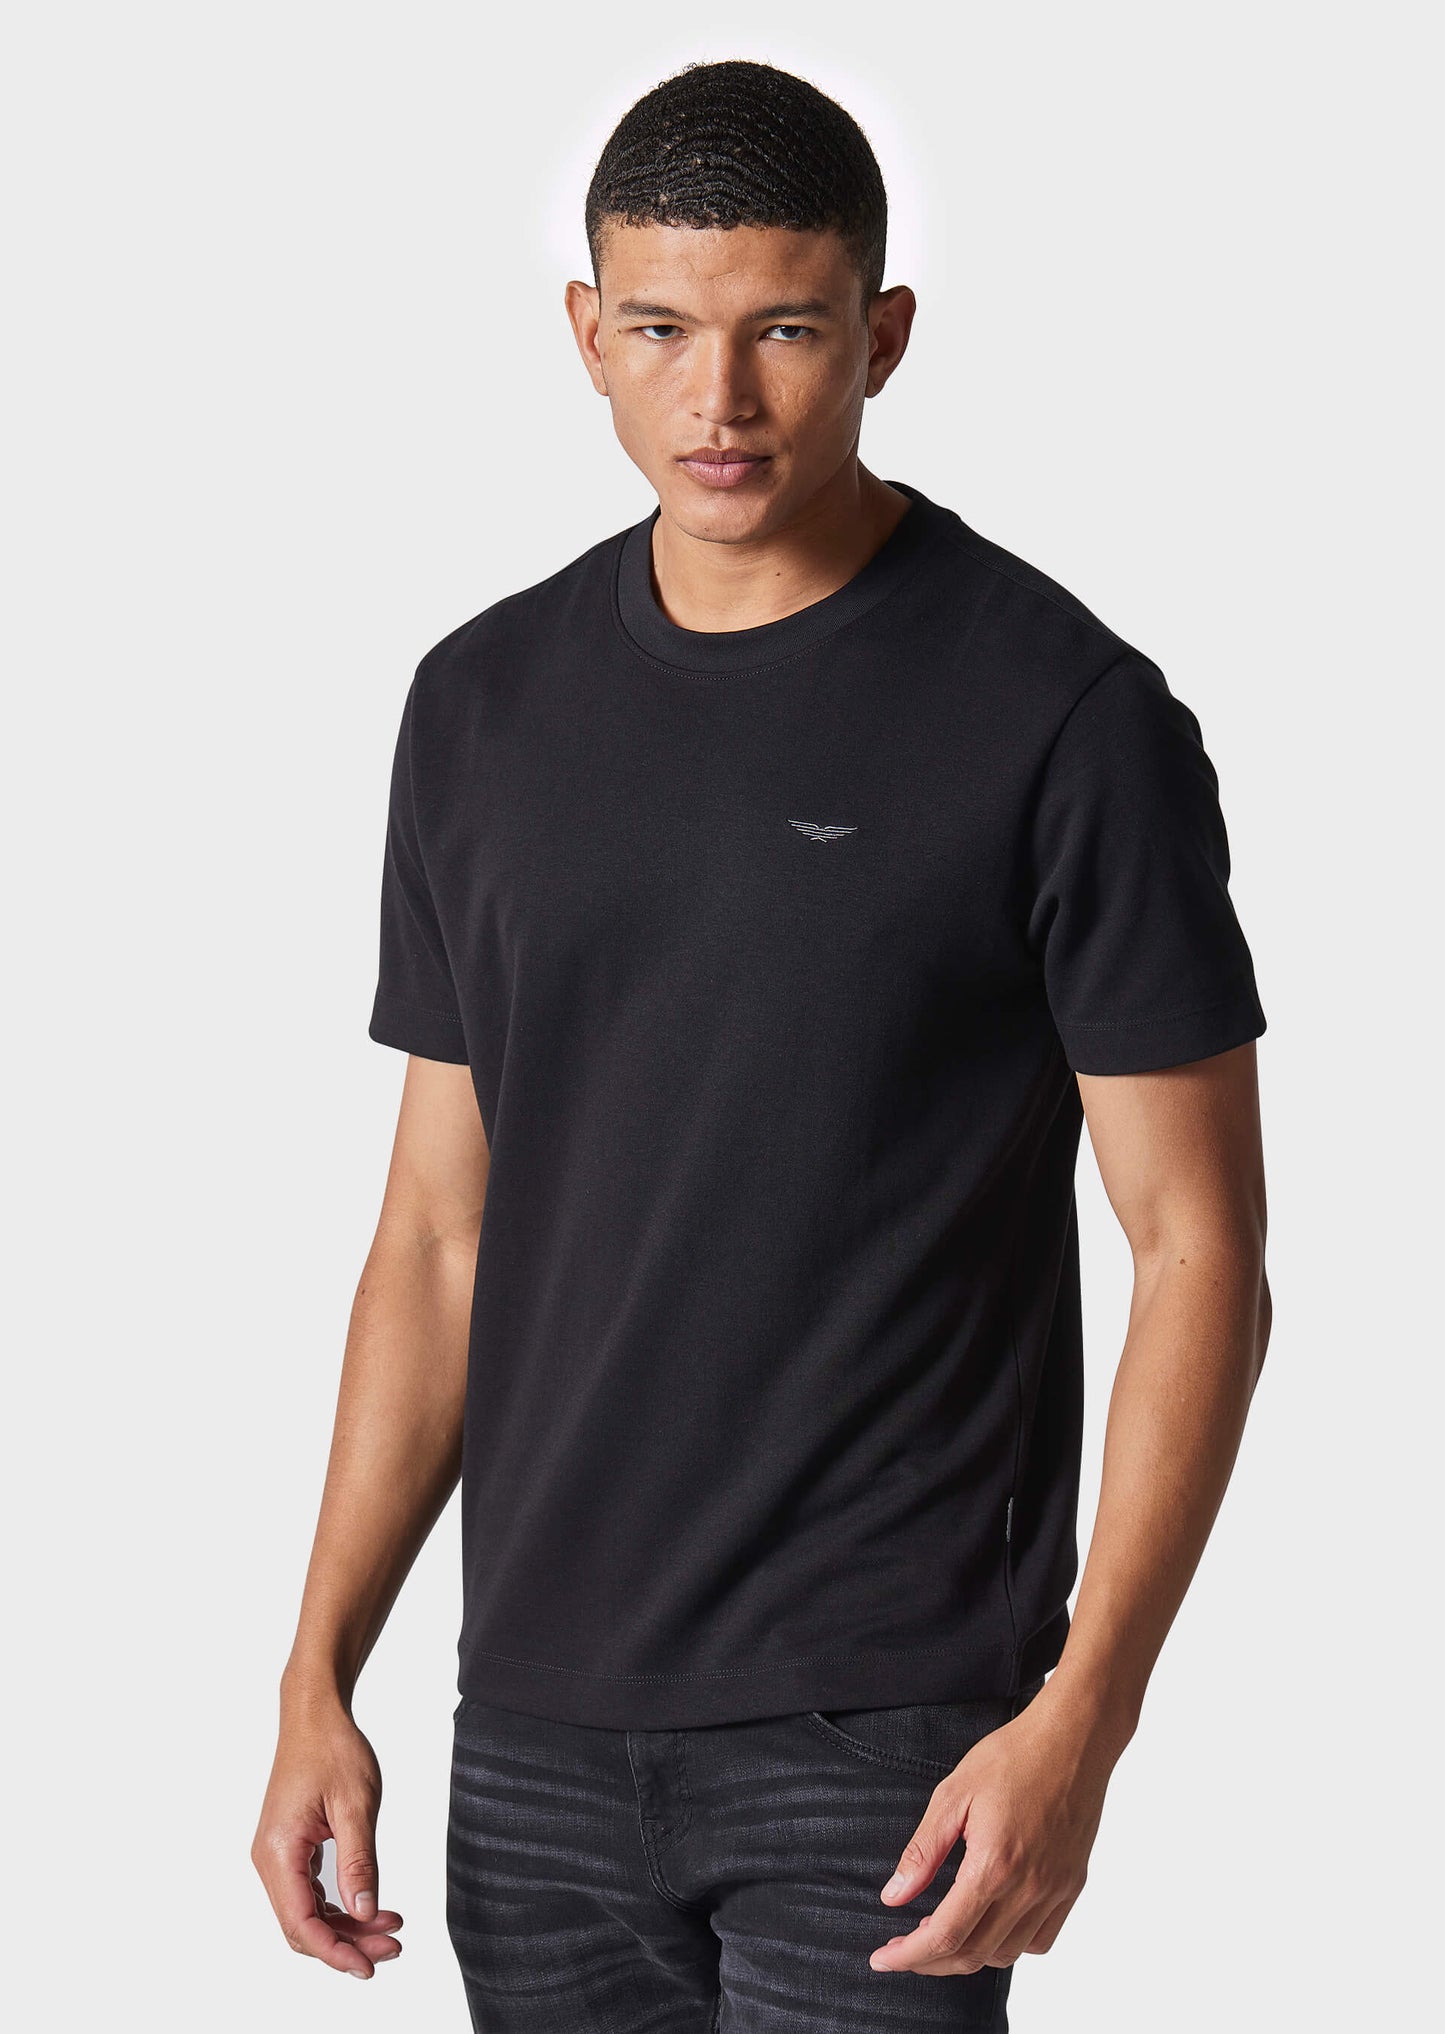 Samton Black T-Shirt